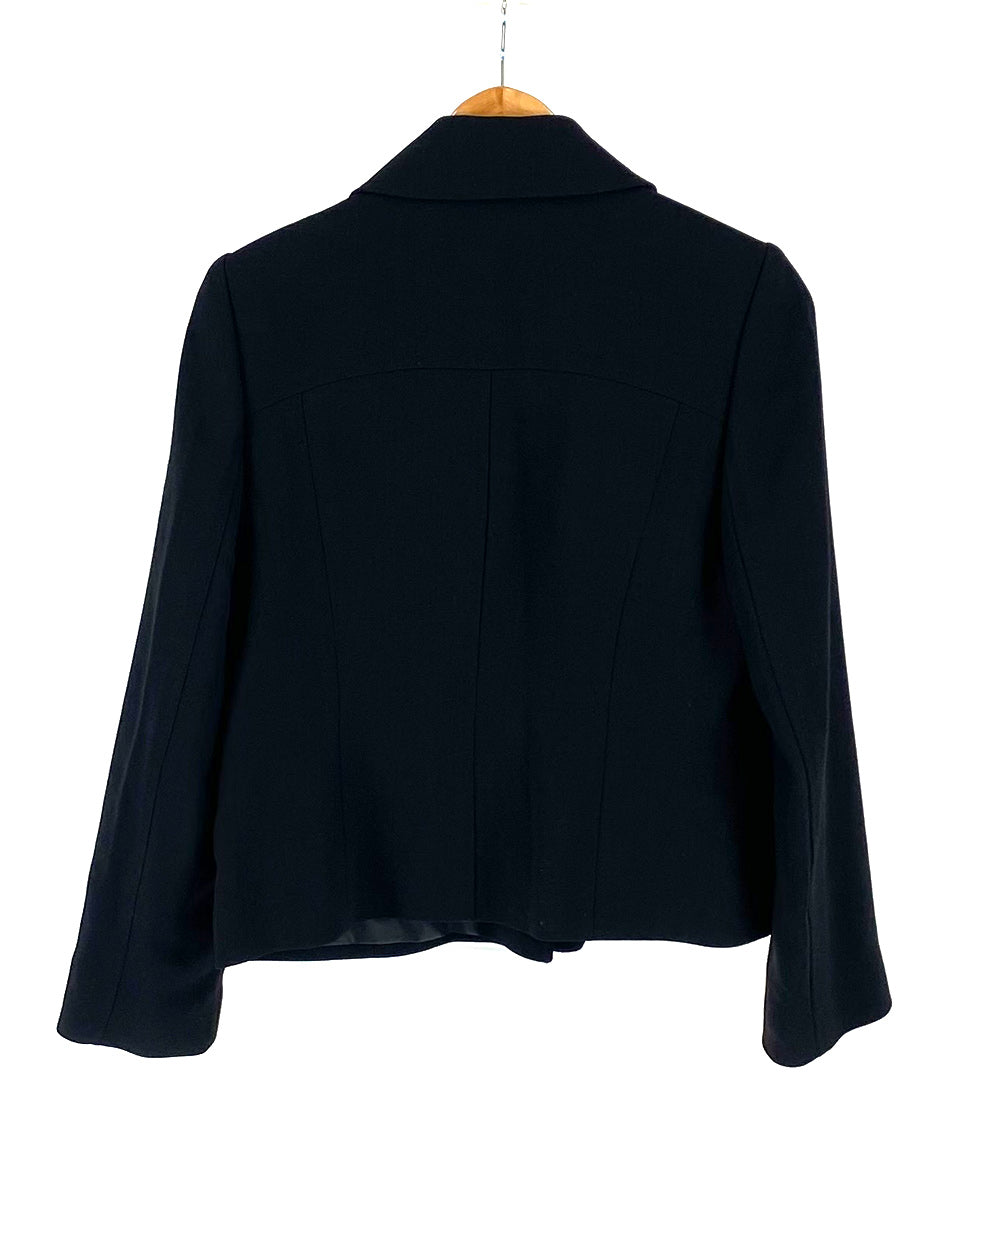 Viyella Black Cropped Jacket Petite 10